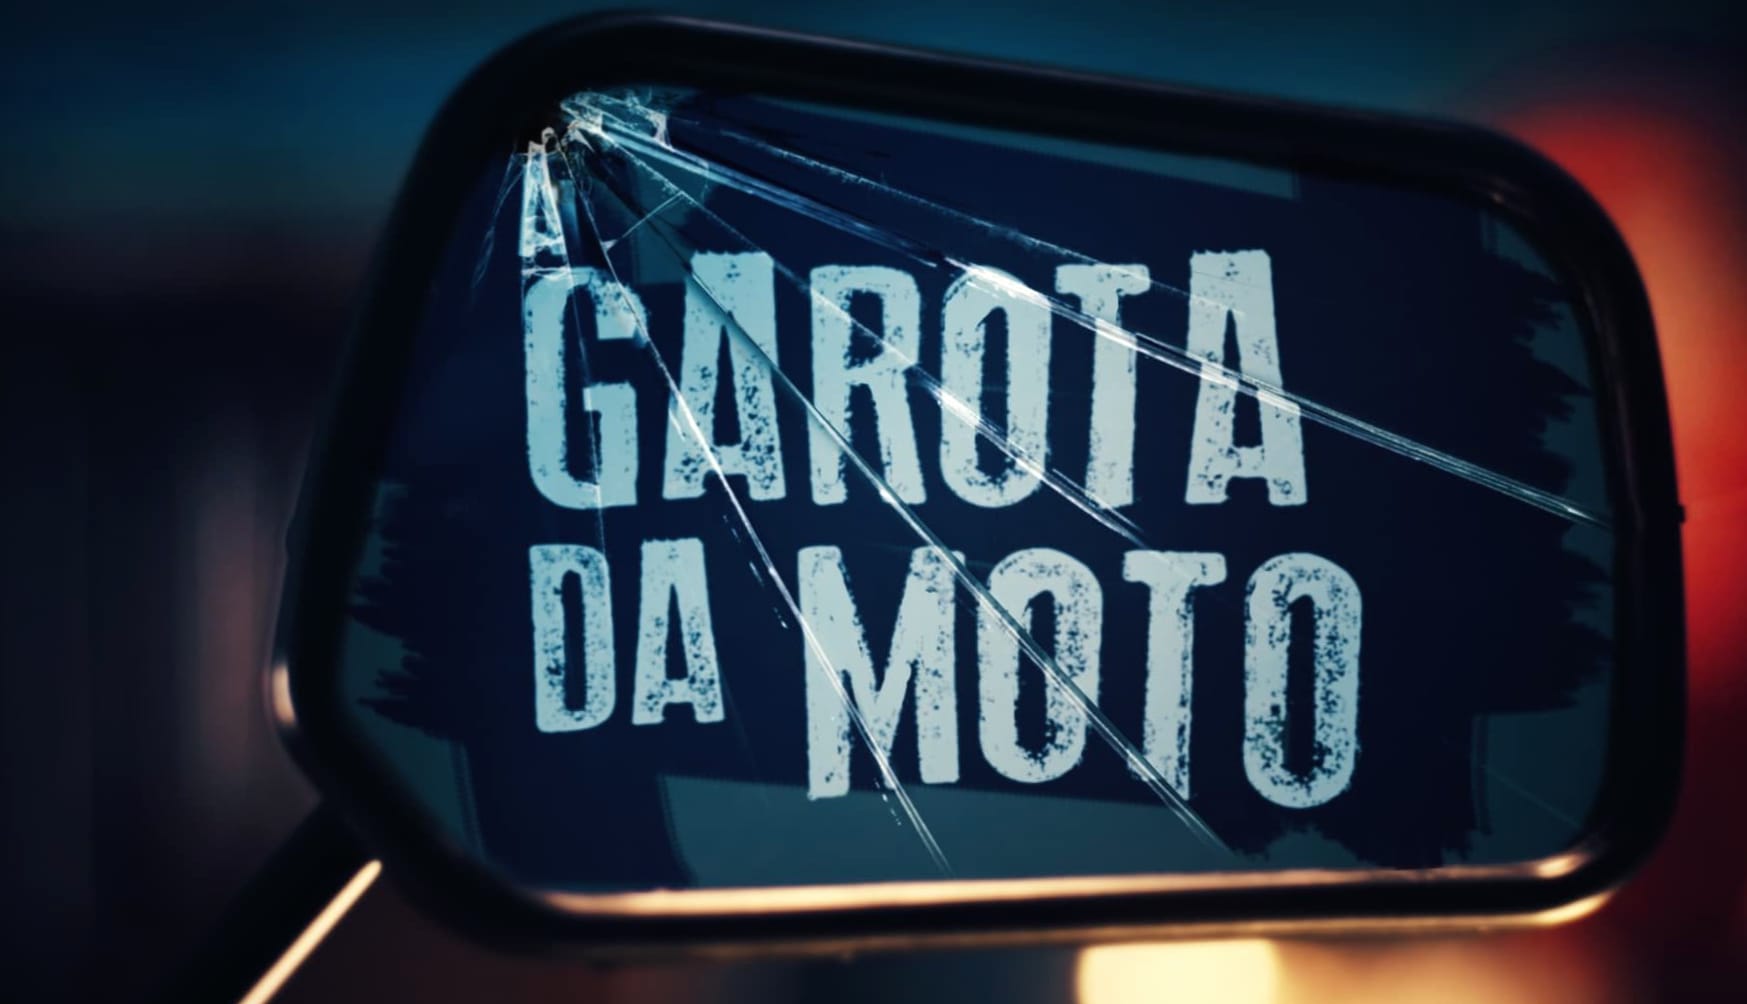 A Garota da Moto at 320 x 480 iPhone size wallpapers HD quality